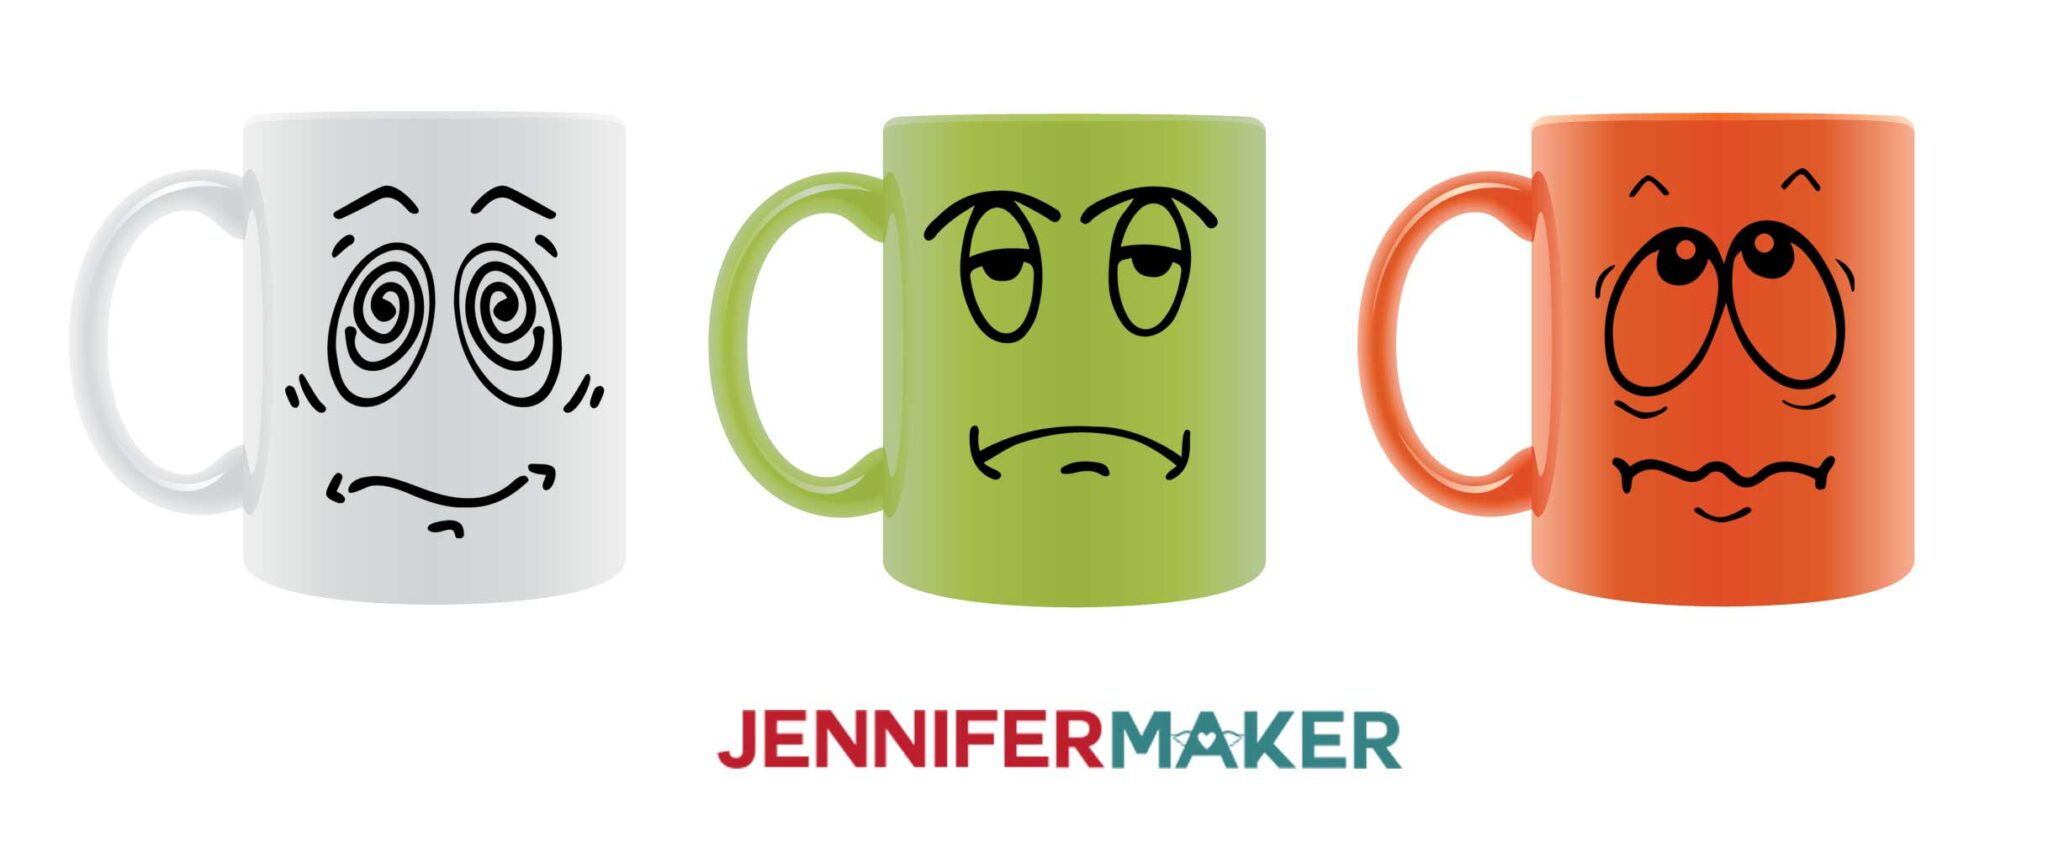 Download Cricut Mug Ideas: Free SVG Cut File Designs - Jennifer Maker